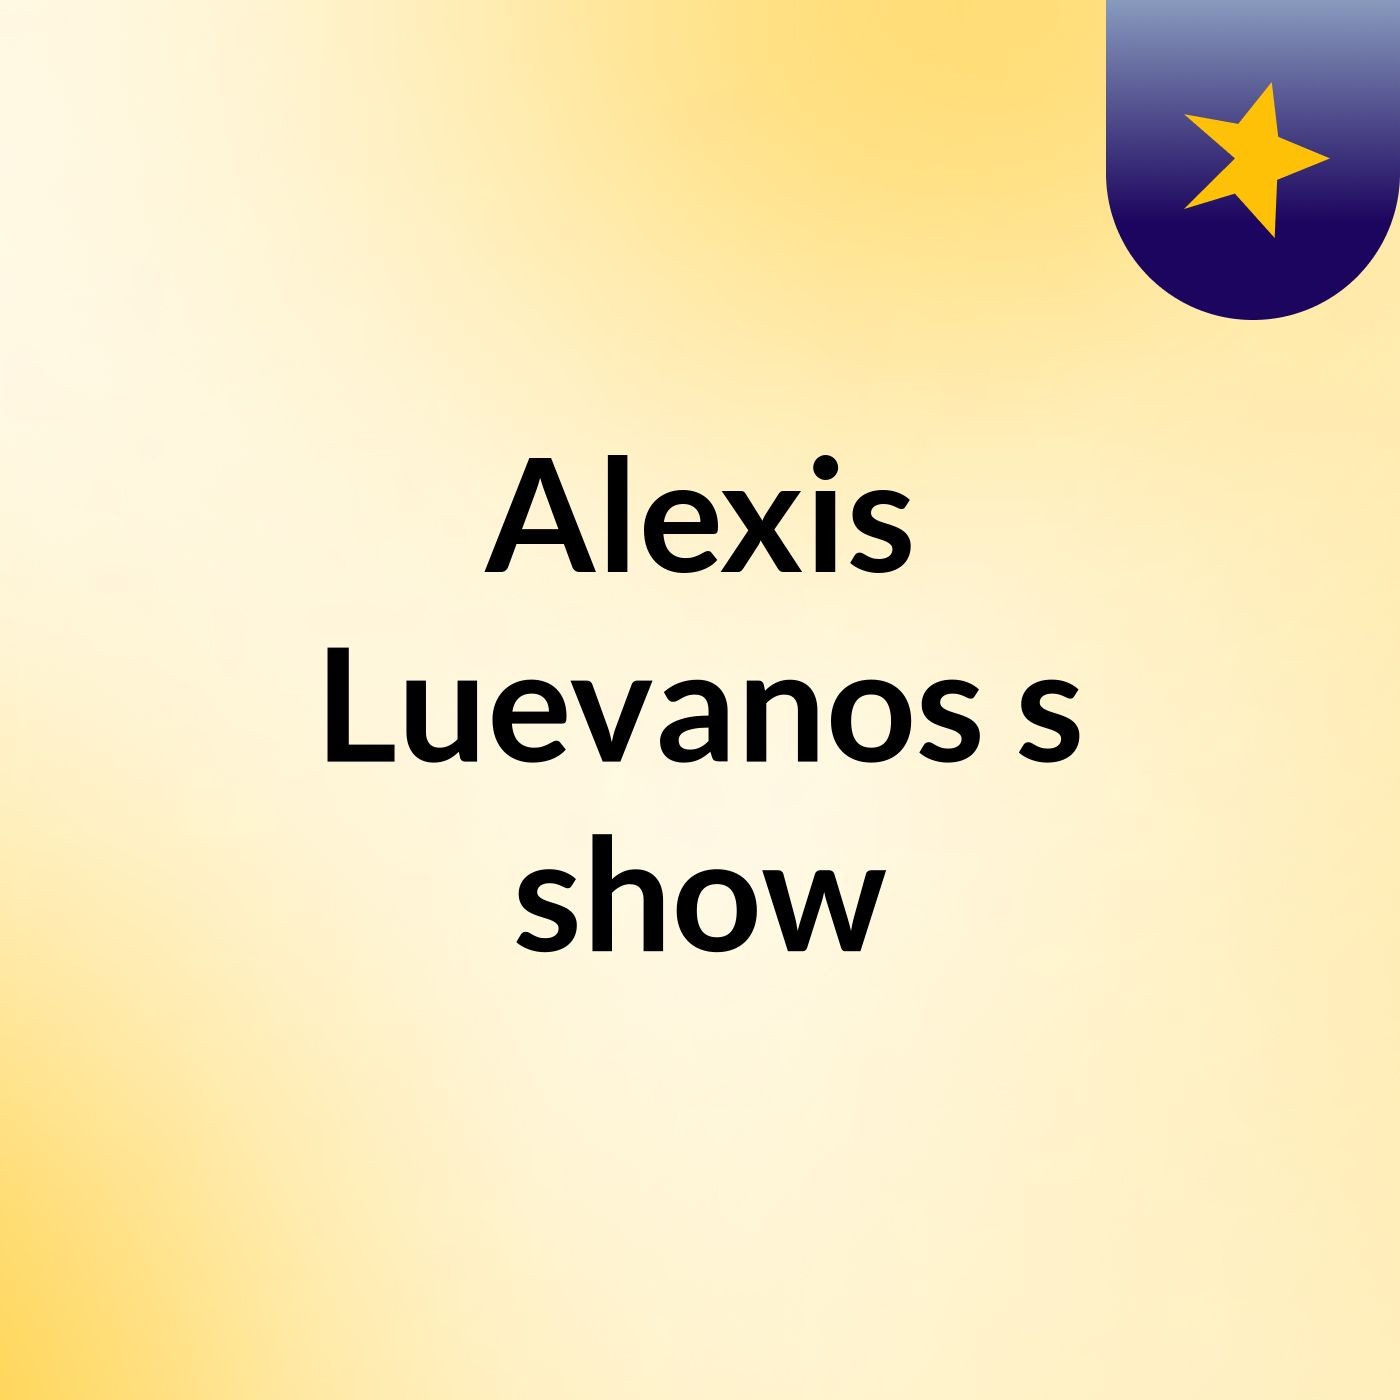 Alexis Luevanos's show